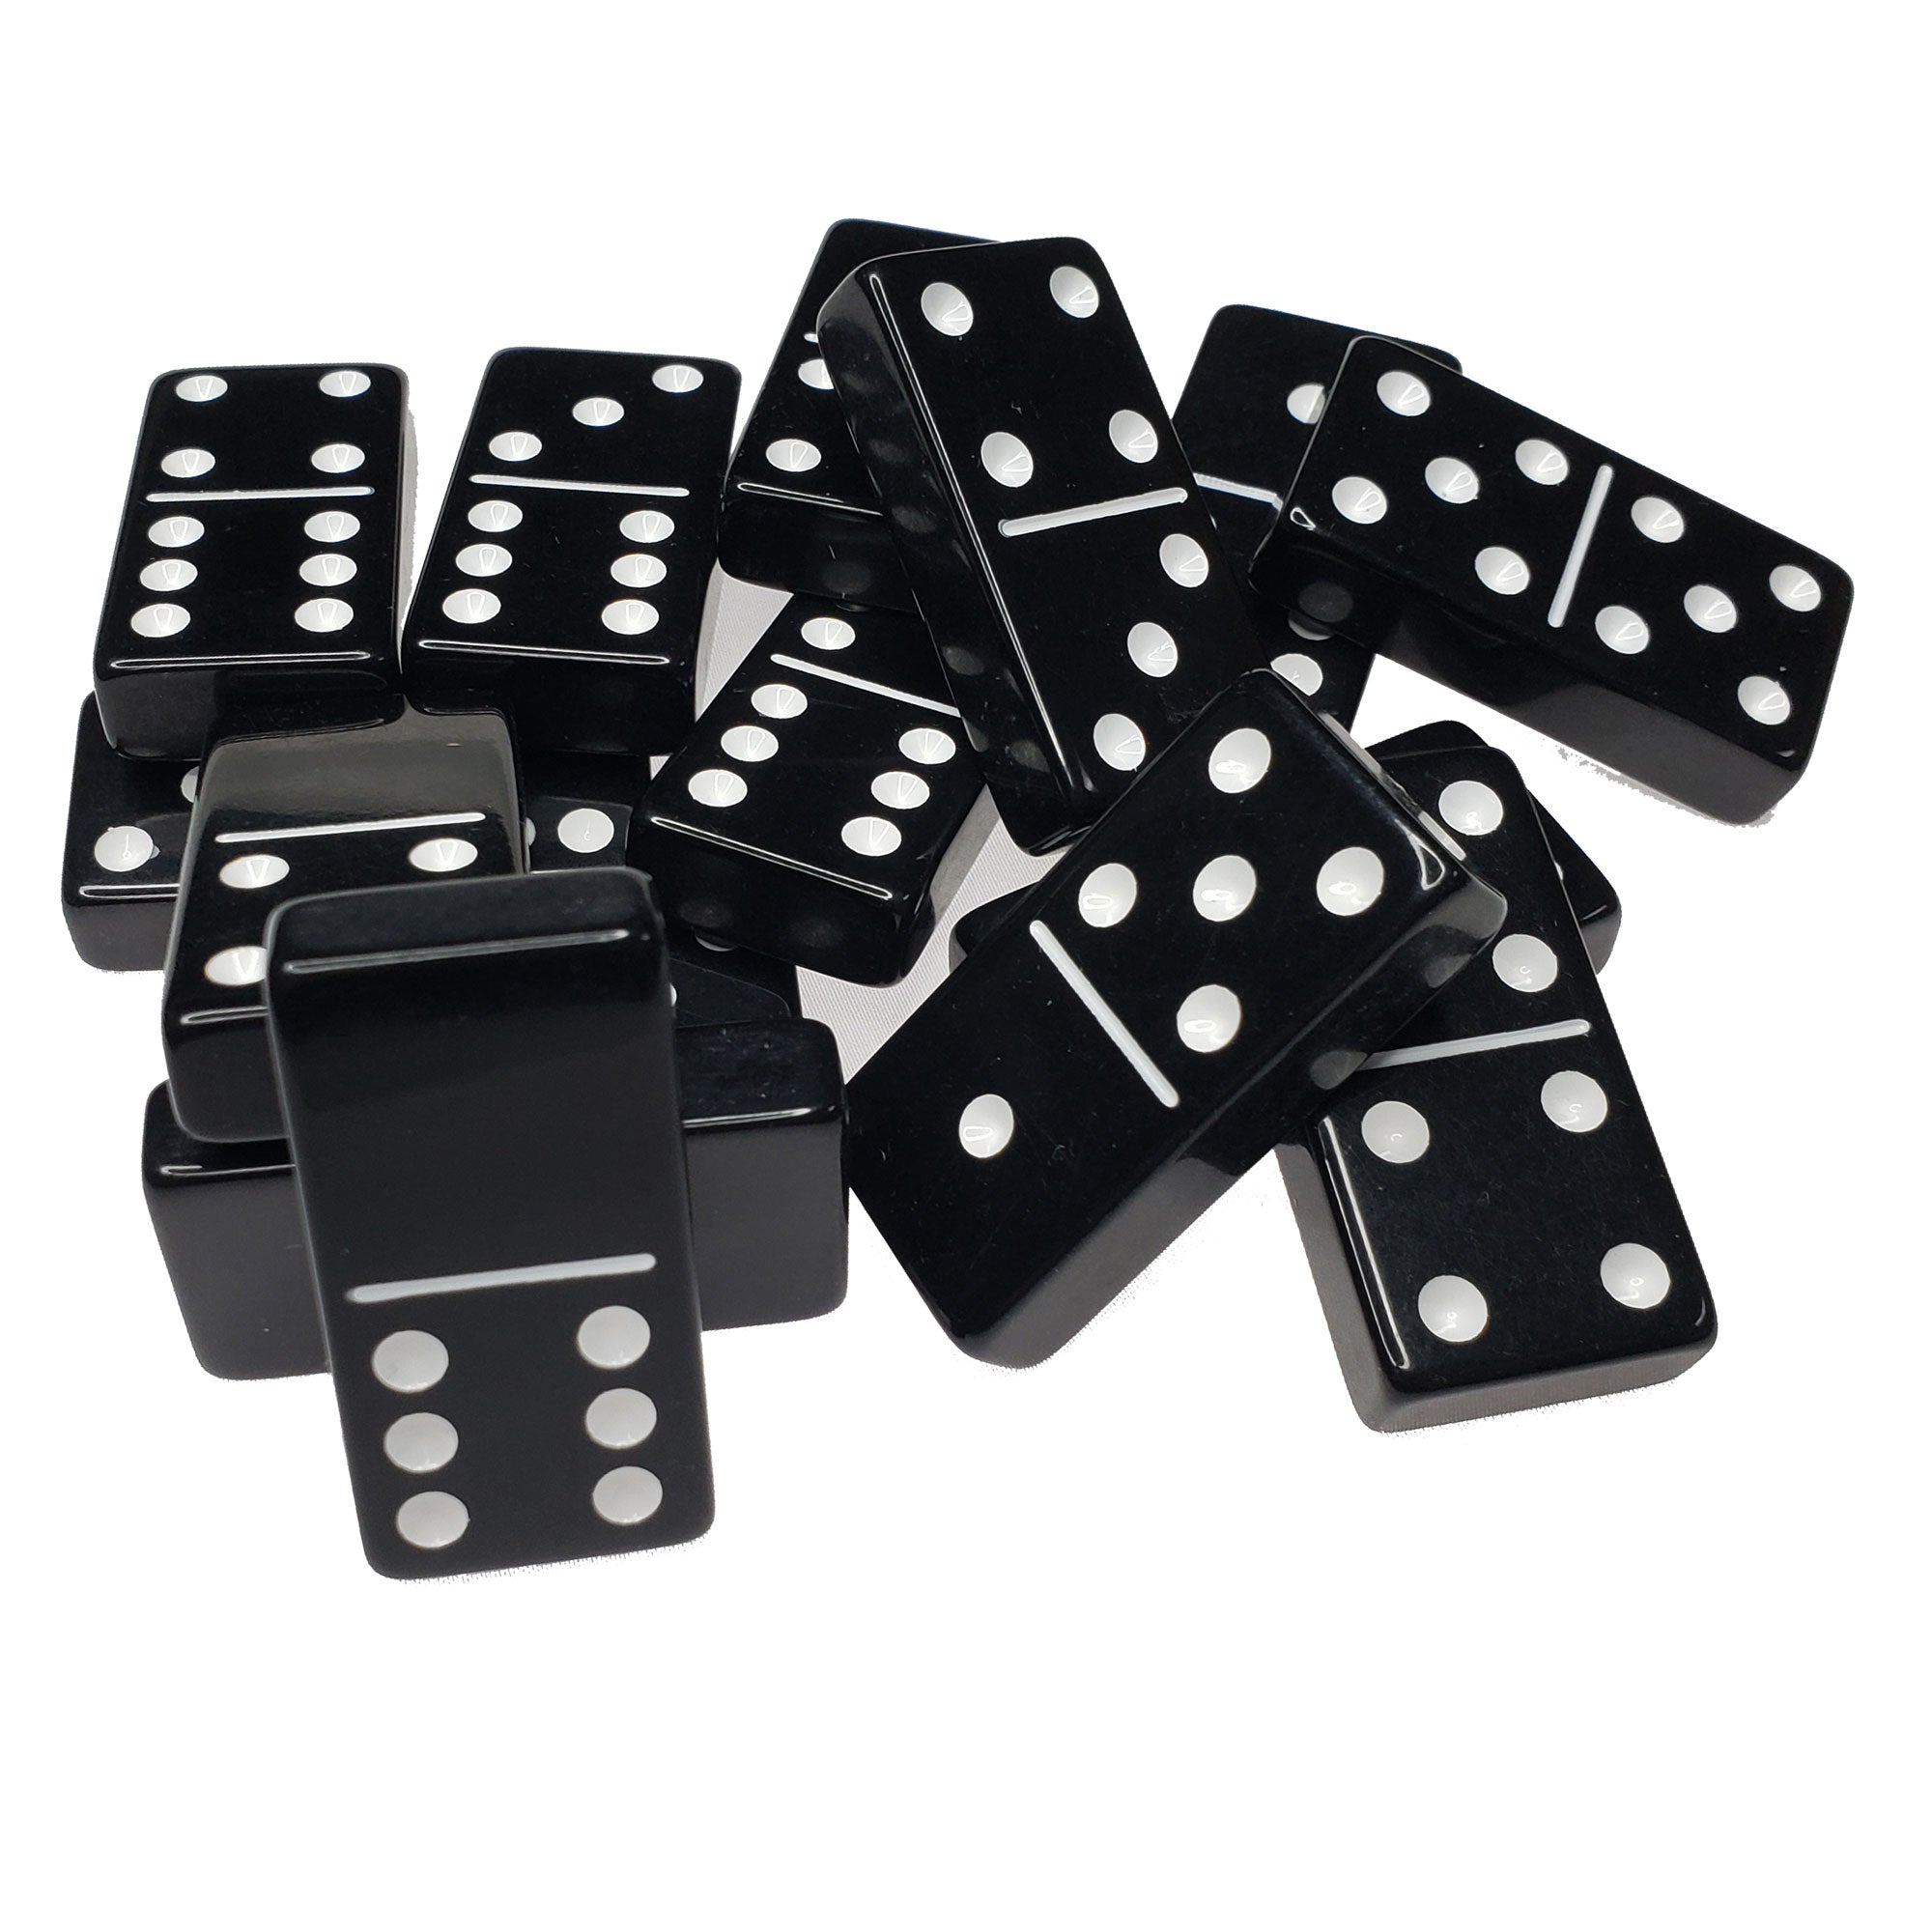 Premium ACRYLIC Double 6 JUMBO Dominoes Set Game | BLACK